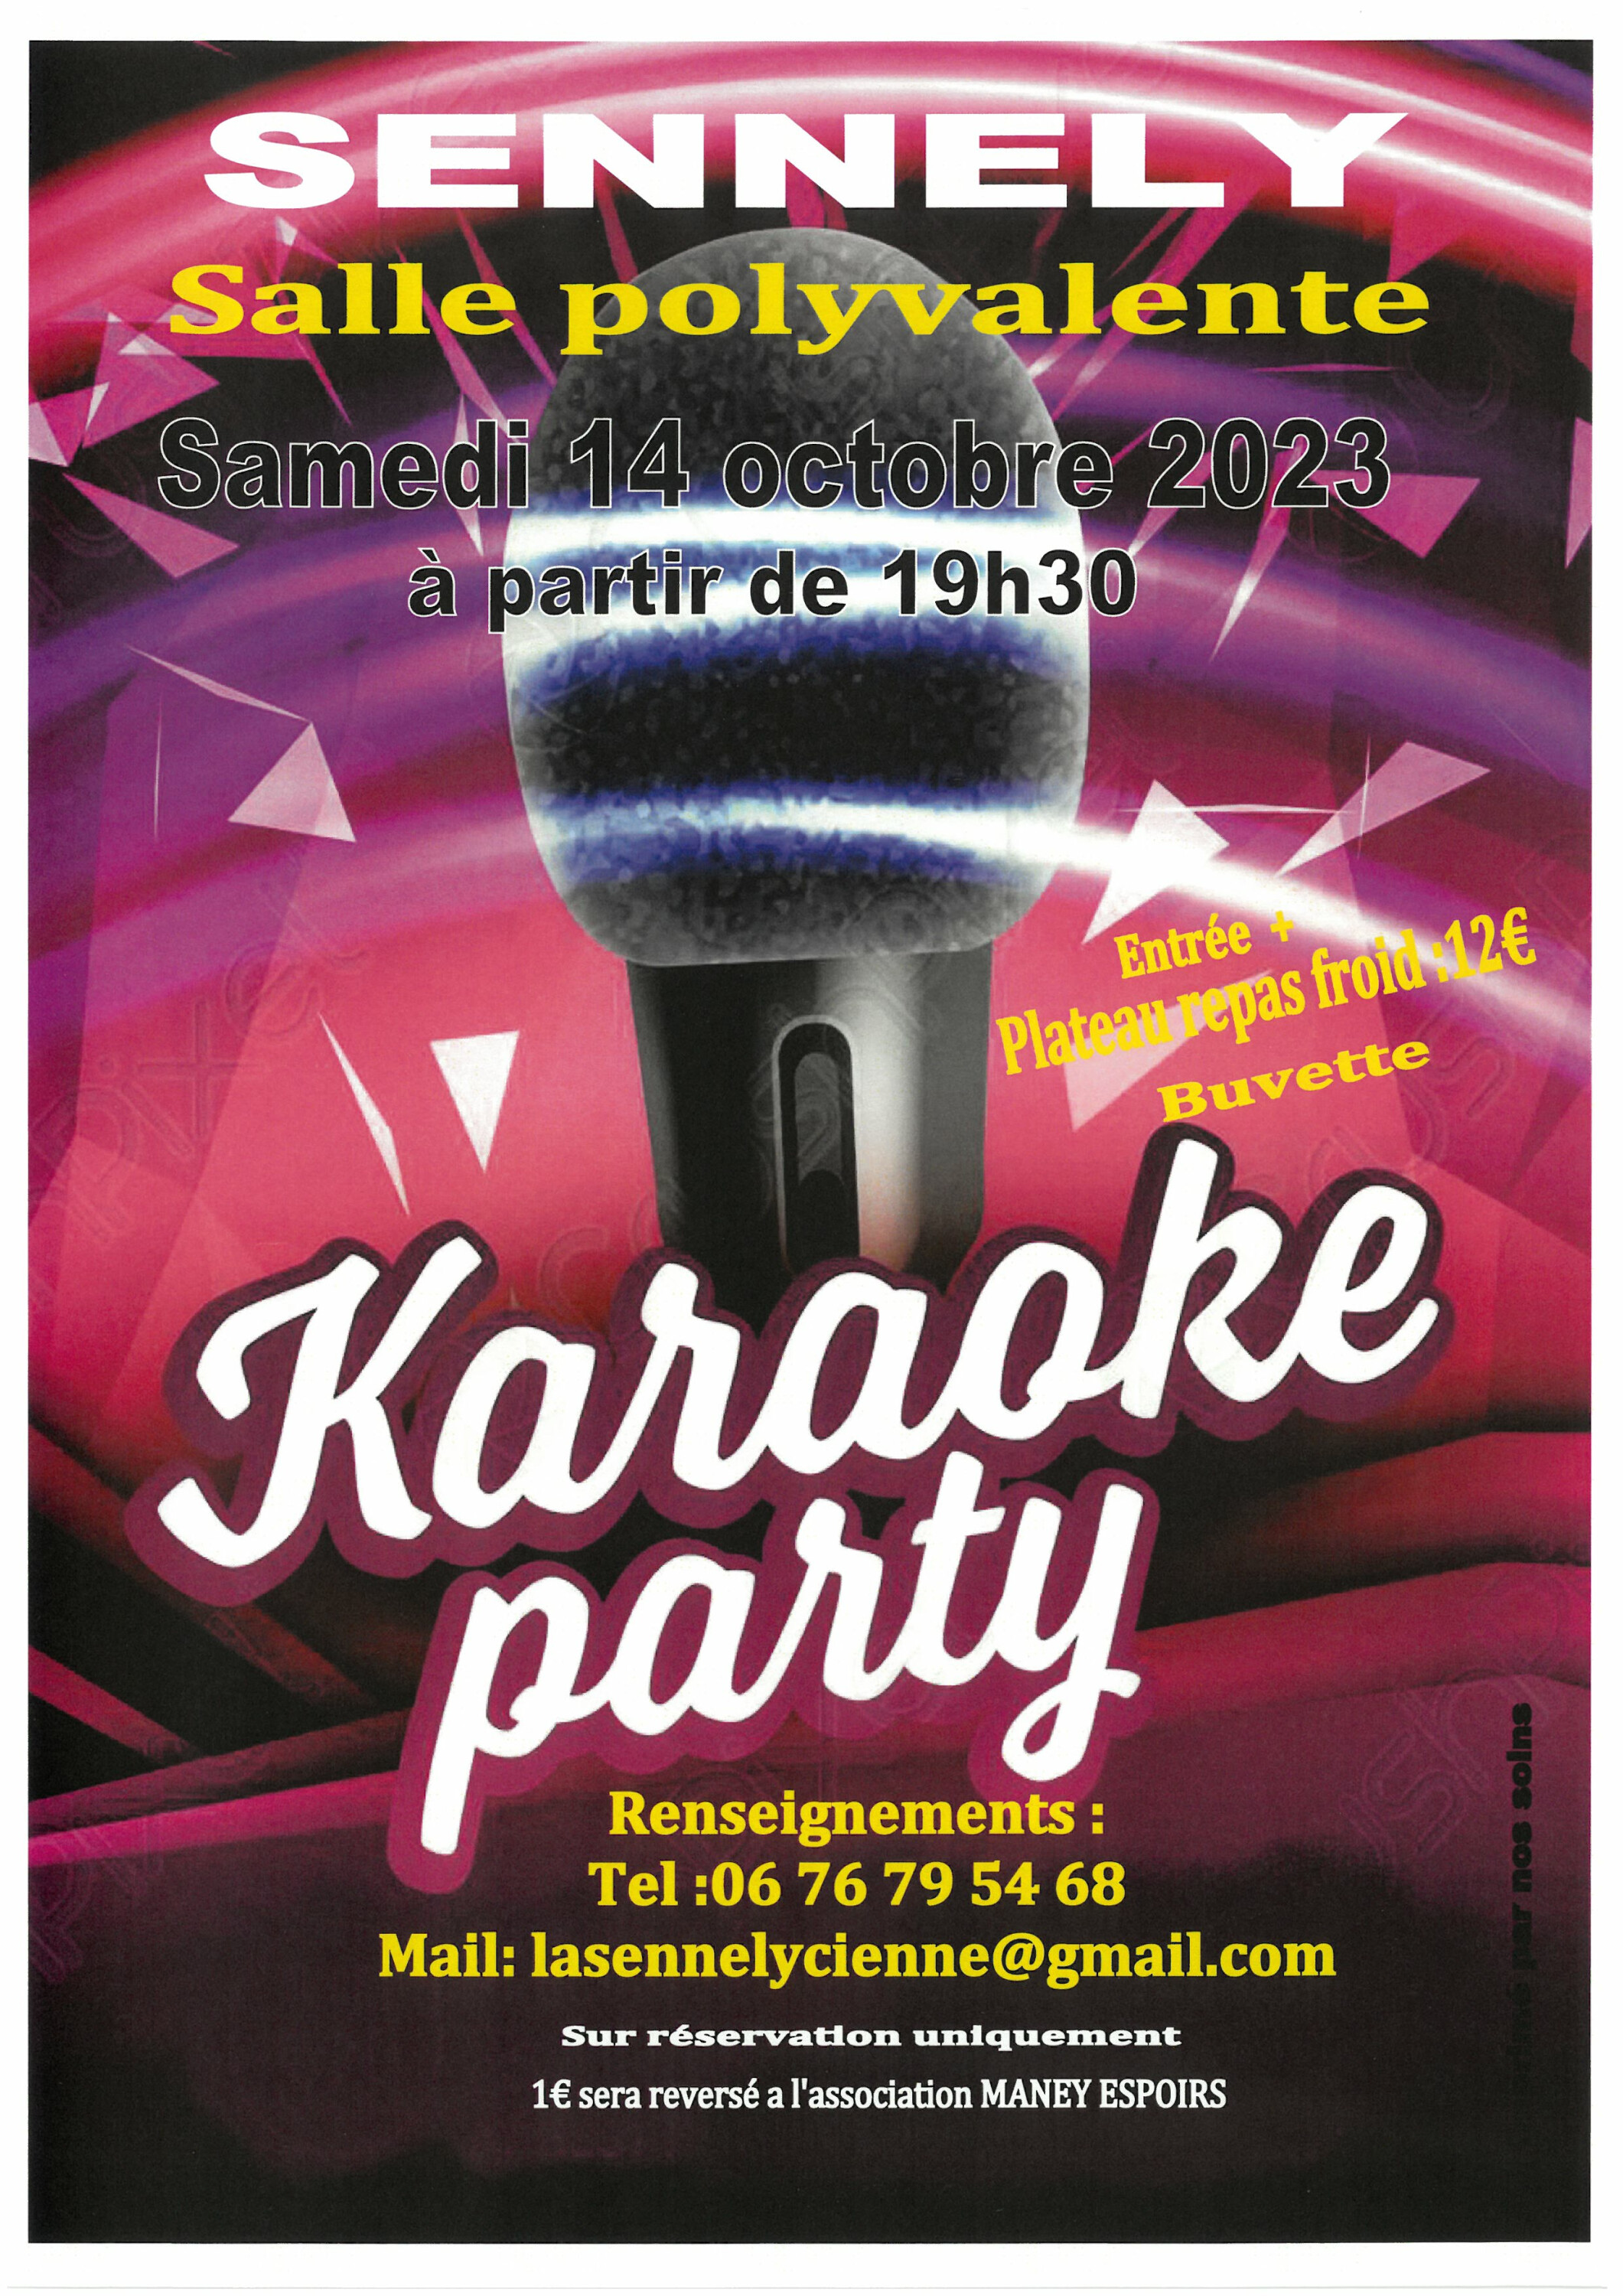 Karaoke Sennely 14 10 23